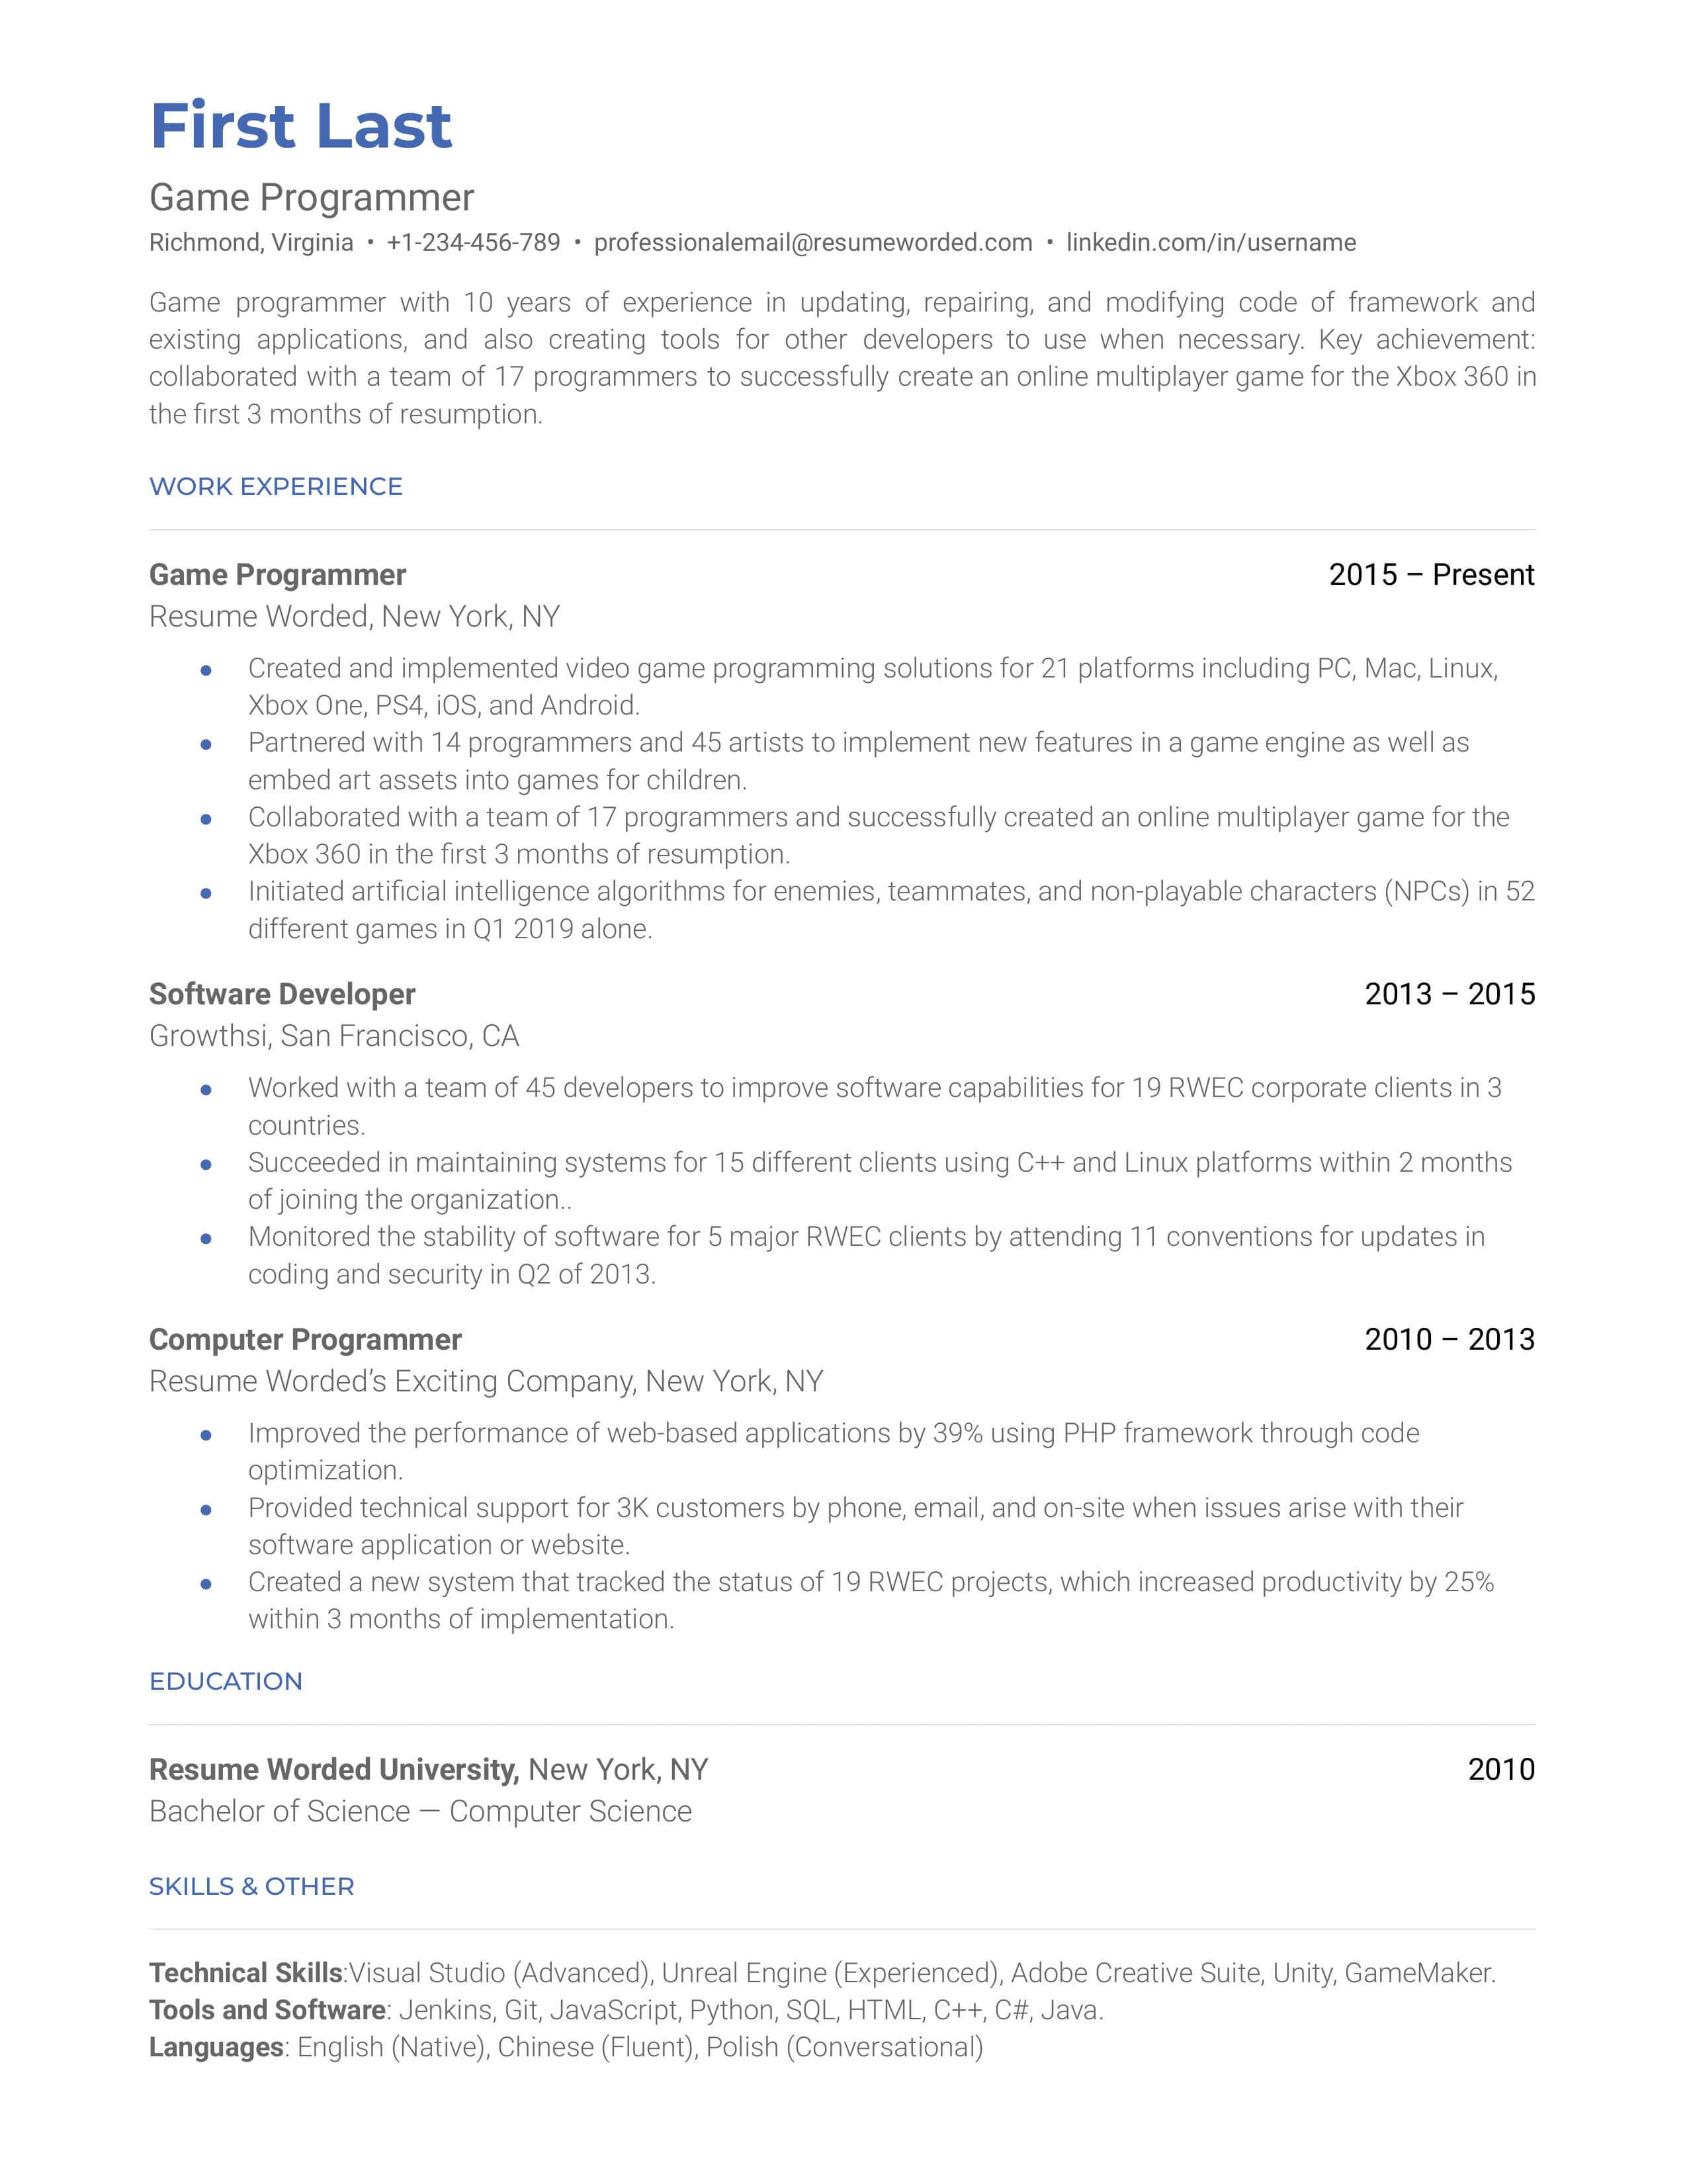 Screenshot of a Game Programmer's CV showcasing skills, experience, and portfolio links.